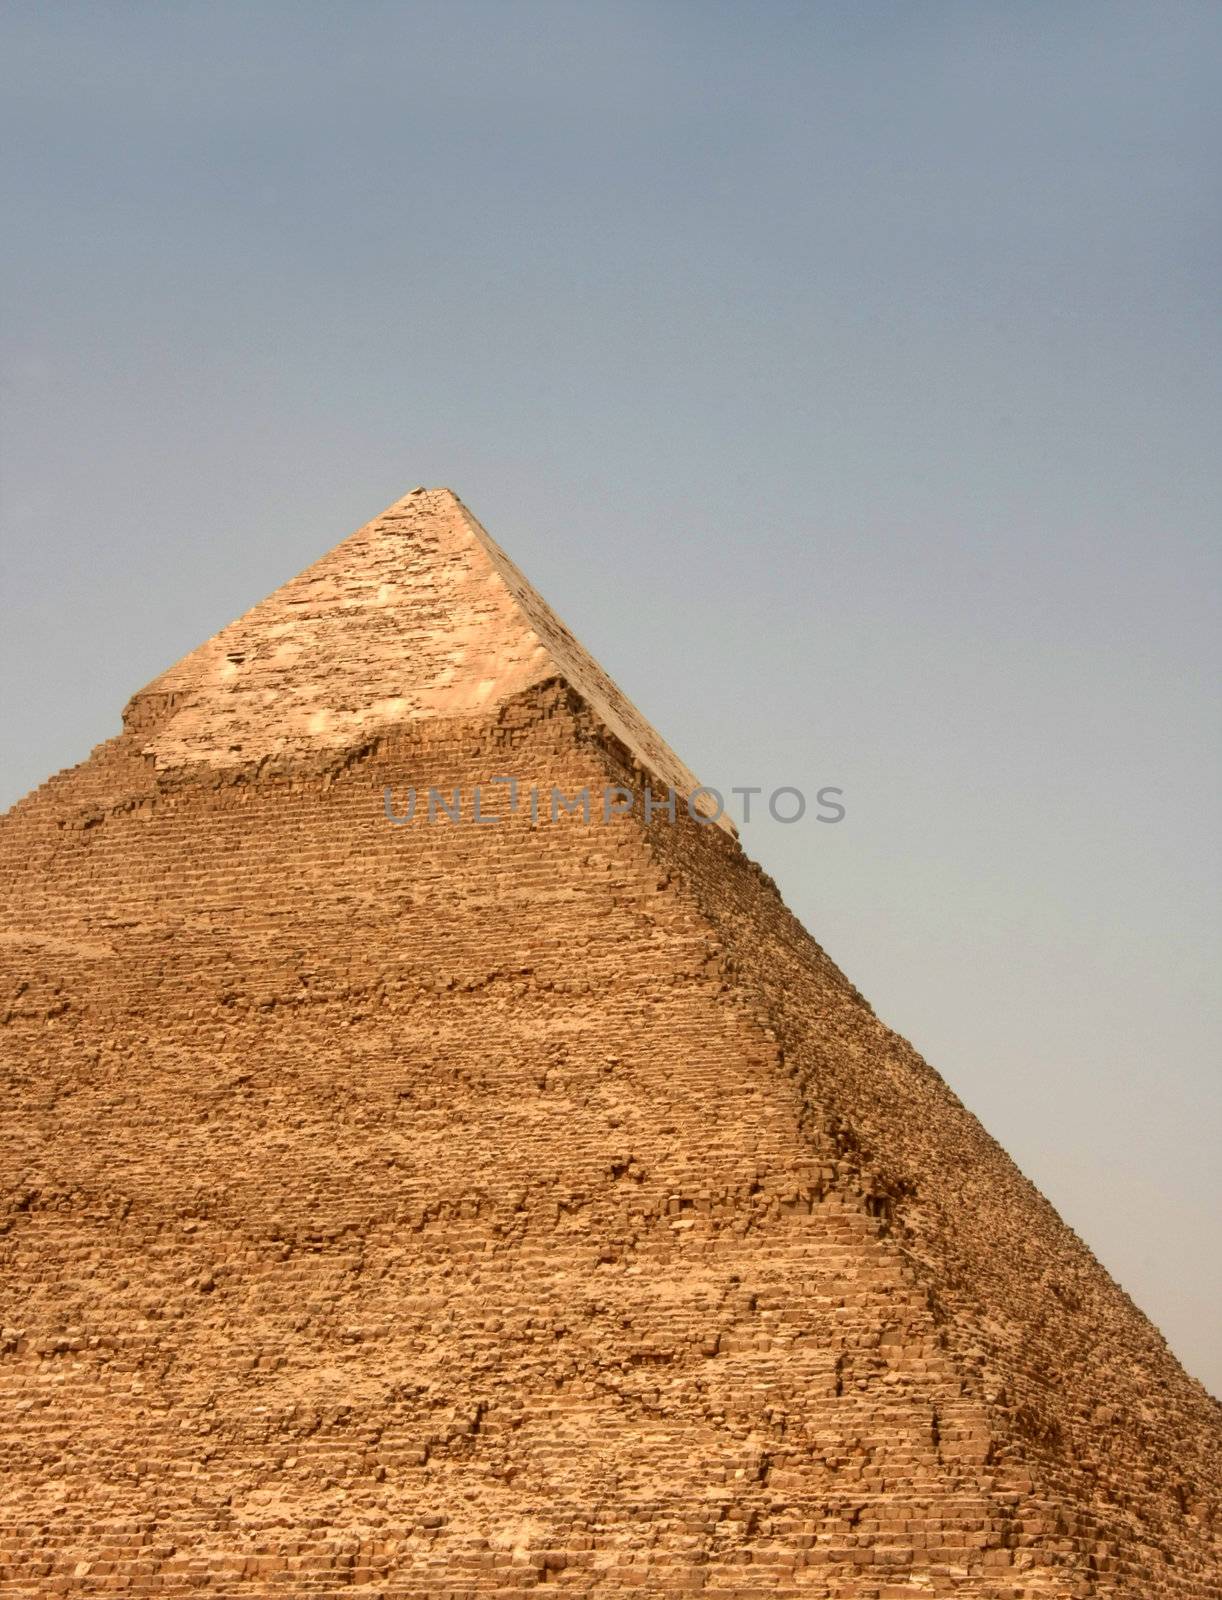 Pyramid by Imagecom